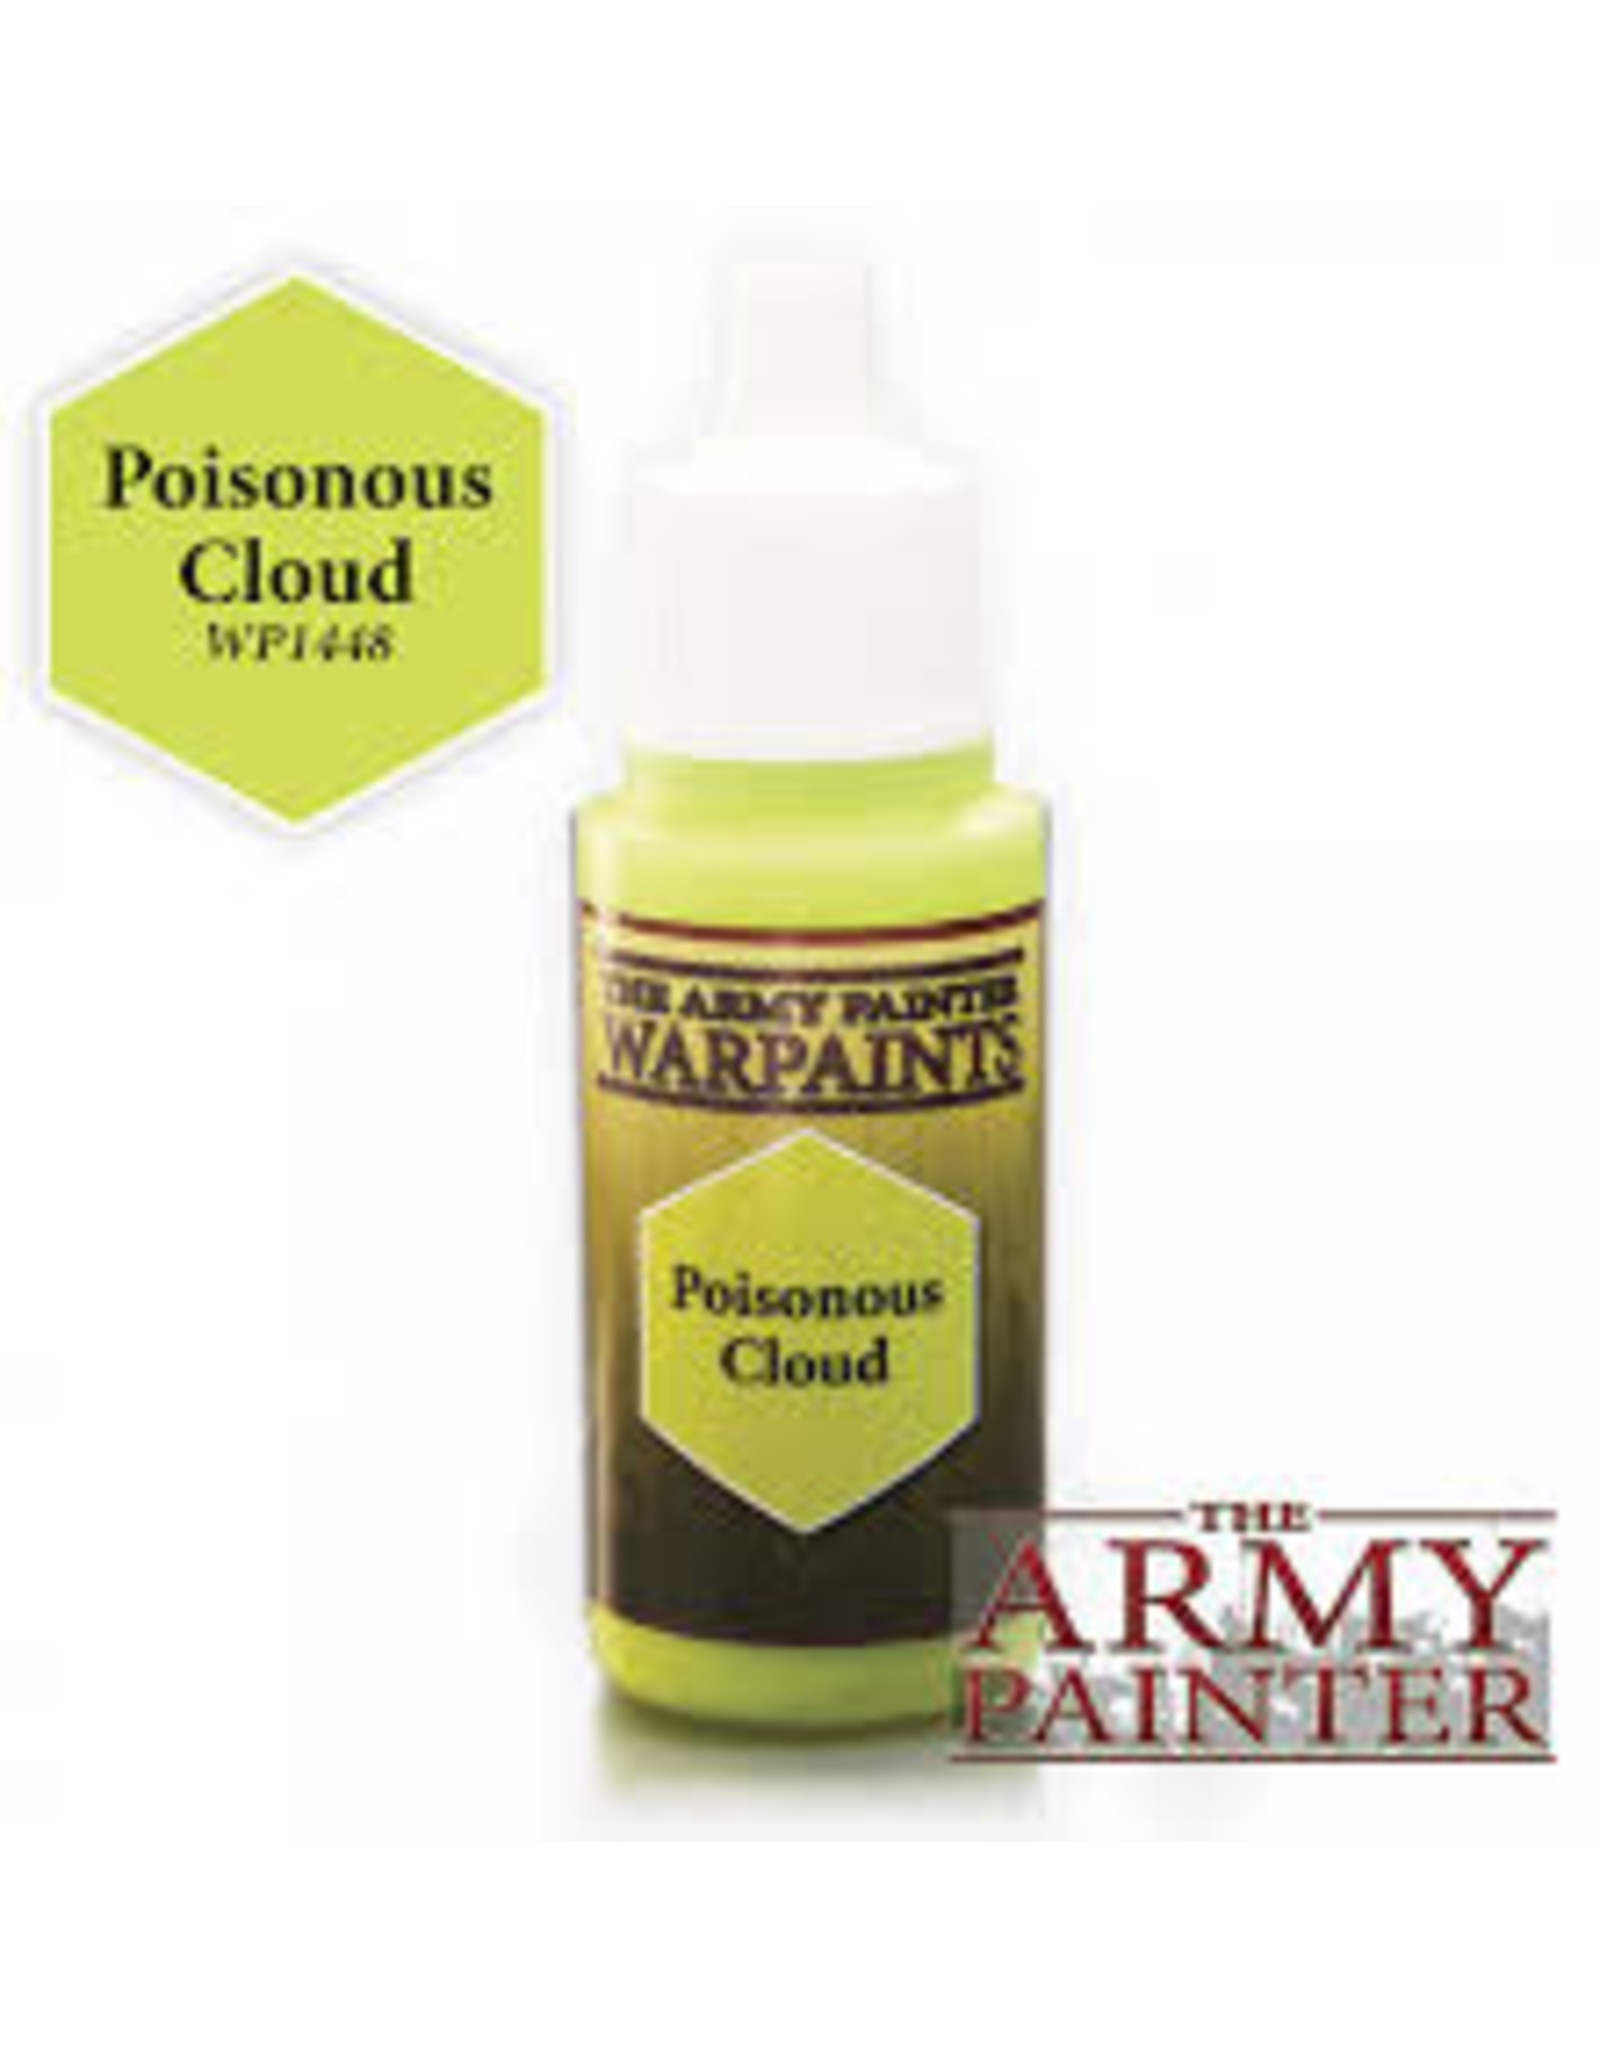 Army Painter Army Painter: Poisonous Cloud